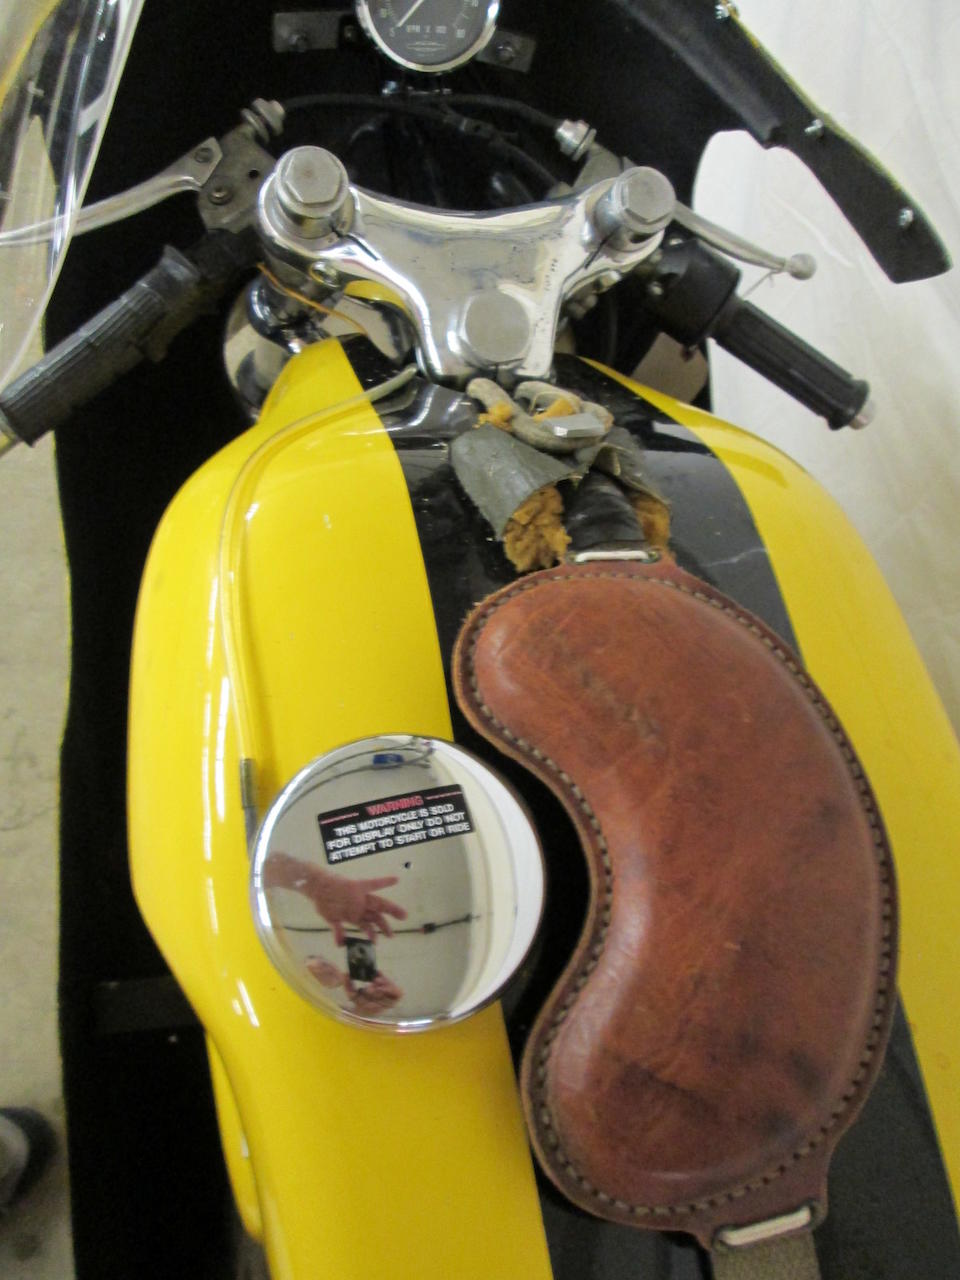 As raced, ex-Larry Darr factory support bike,1970 Harley-Davidson XRTT 750cc Road Racer